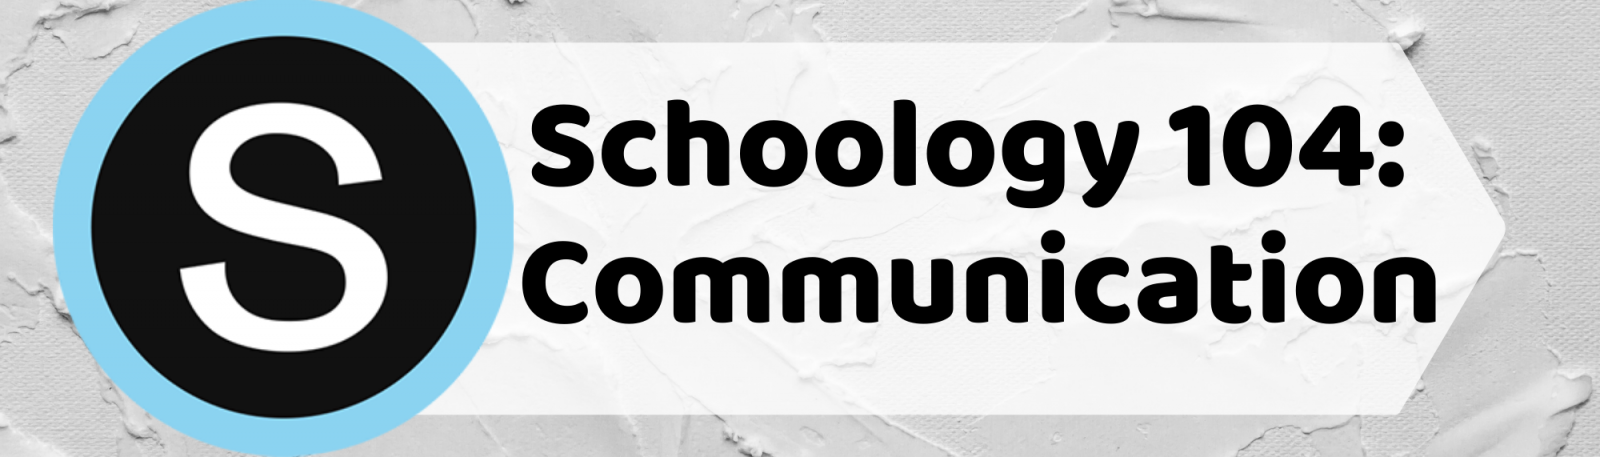 Schoology 104 | Communication